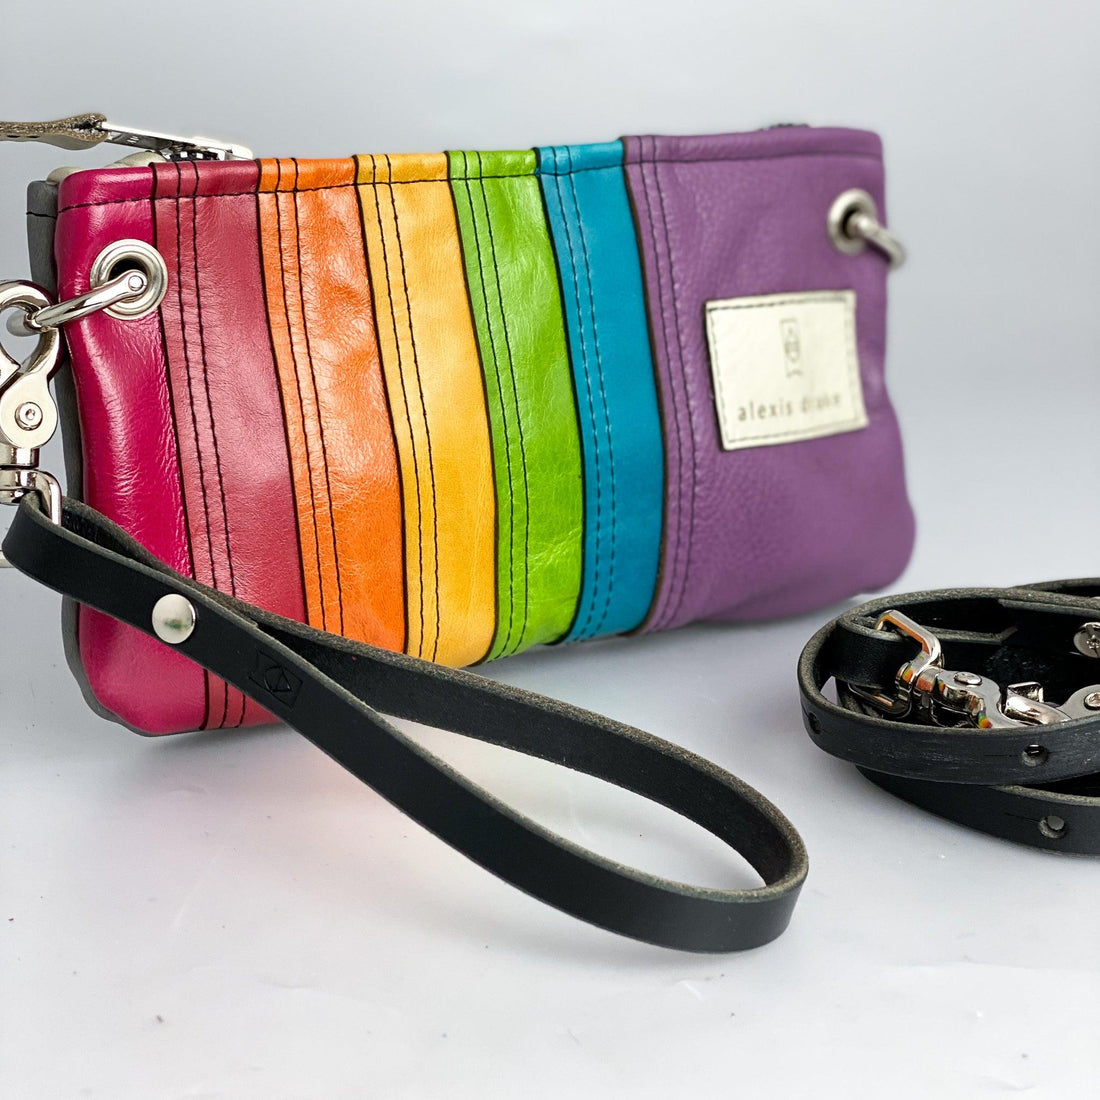 Custom | Rainbow Belt Bag + Crossbody Clutch - Alexis Drake